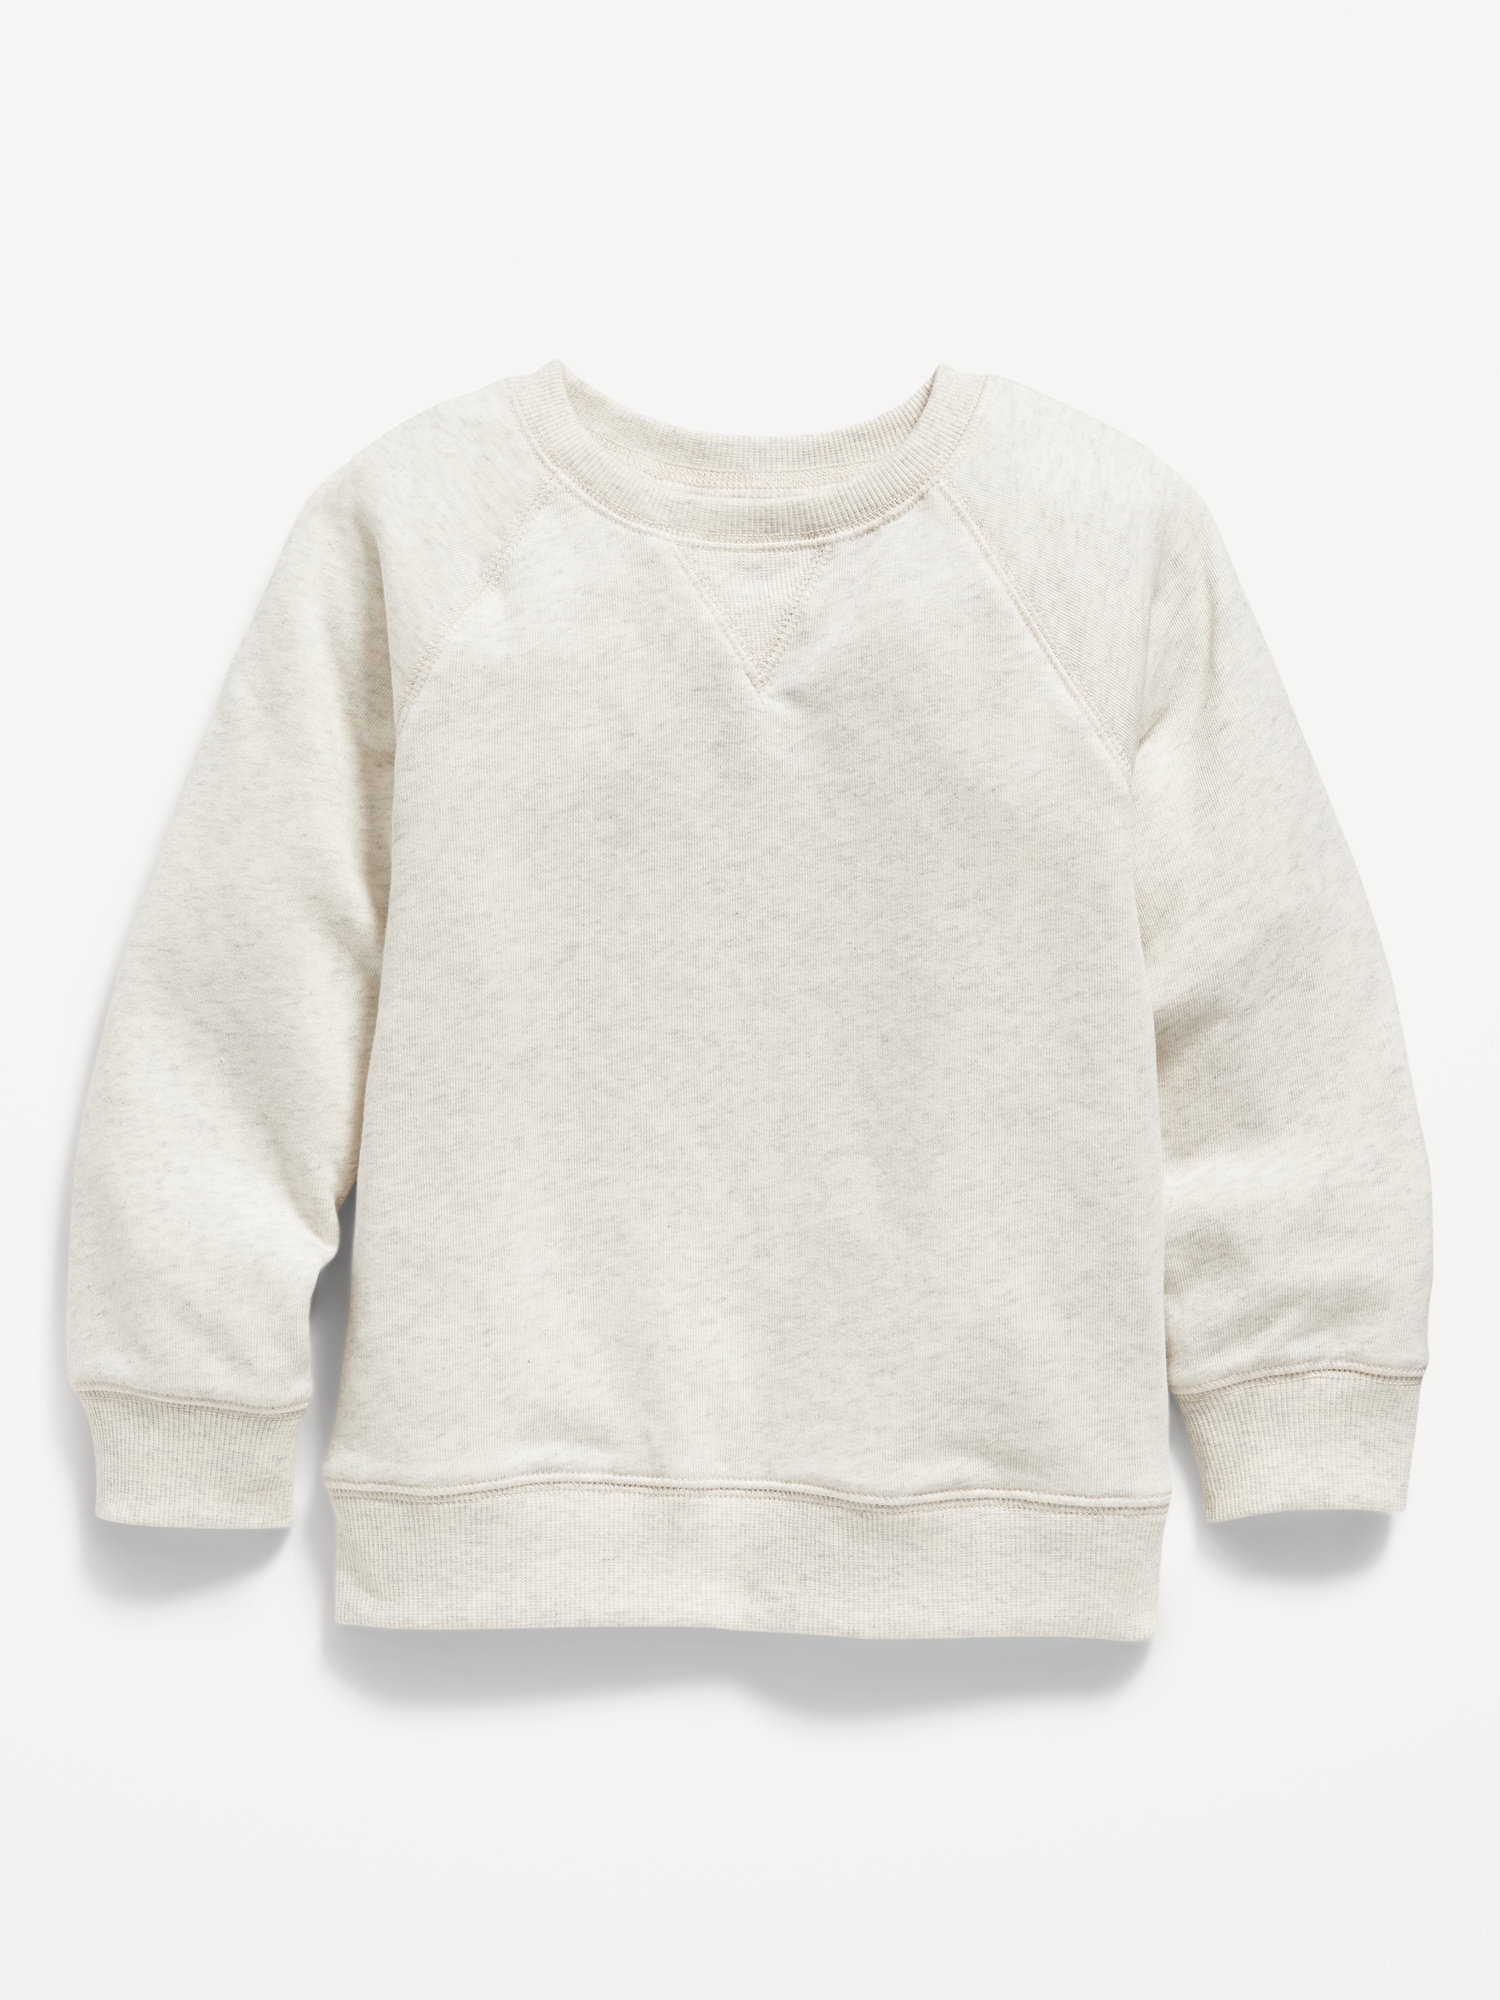 Crew-Neck Sweatshirt for Toddler Boys | Old Navy